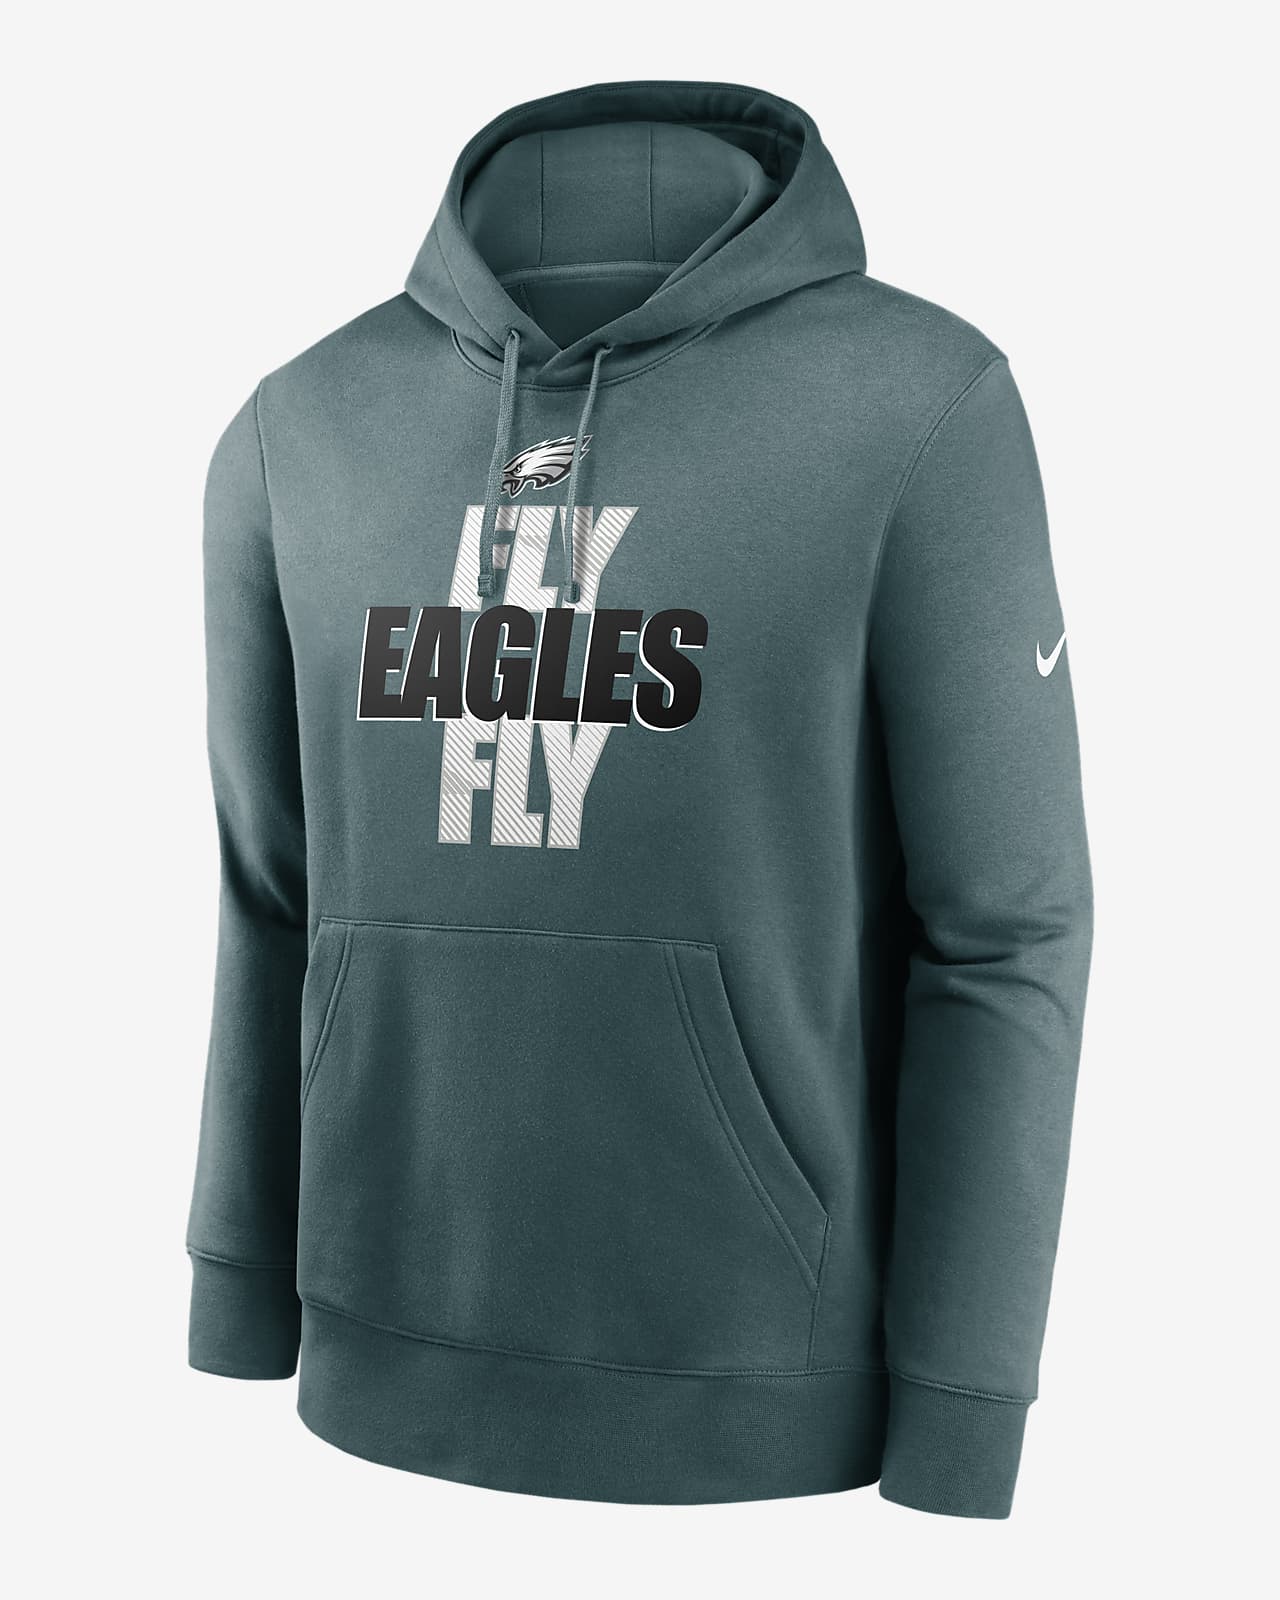 Details about   Philadelphia Eagles Football Hoodie Winter Warm Sweatshirt Fleece Hooded Jacket 